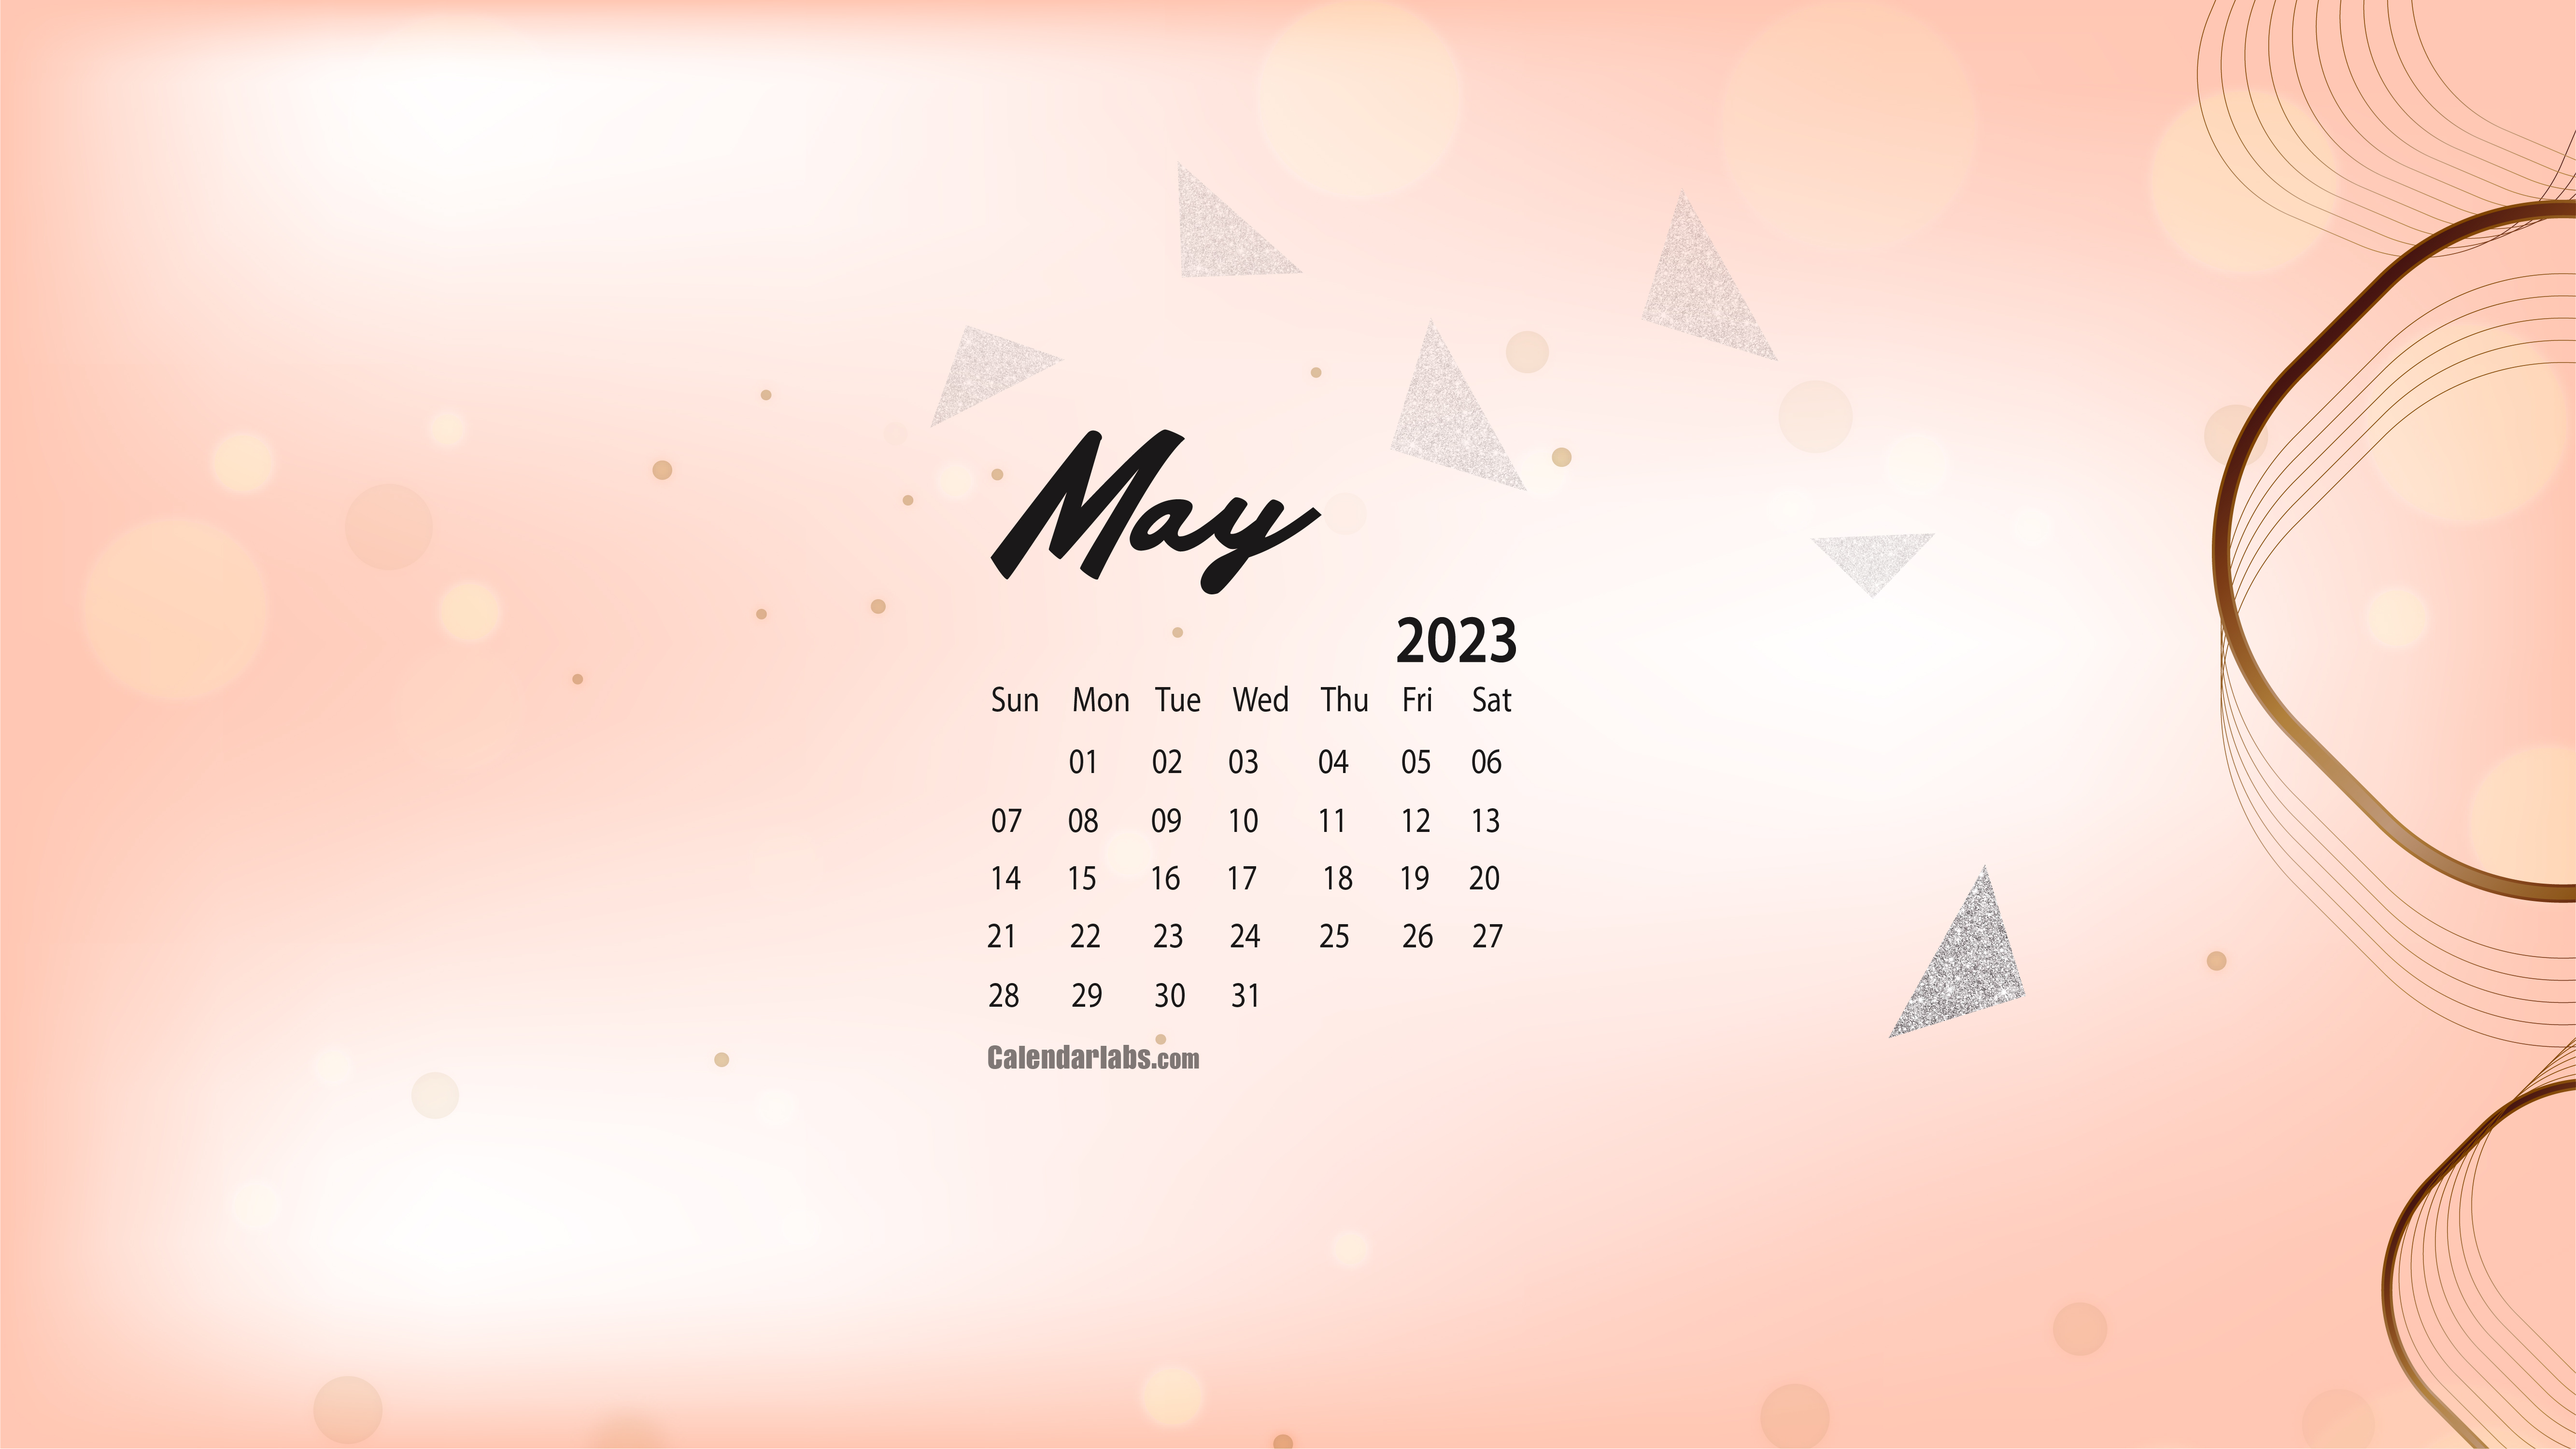 May 2023 Calendar Wallpapers HD Free Download  PixelsTalkNet